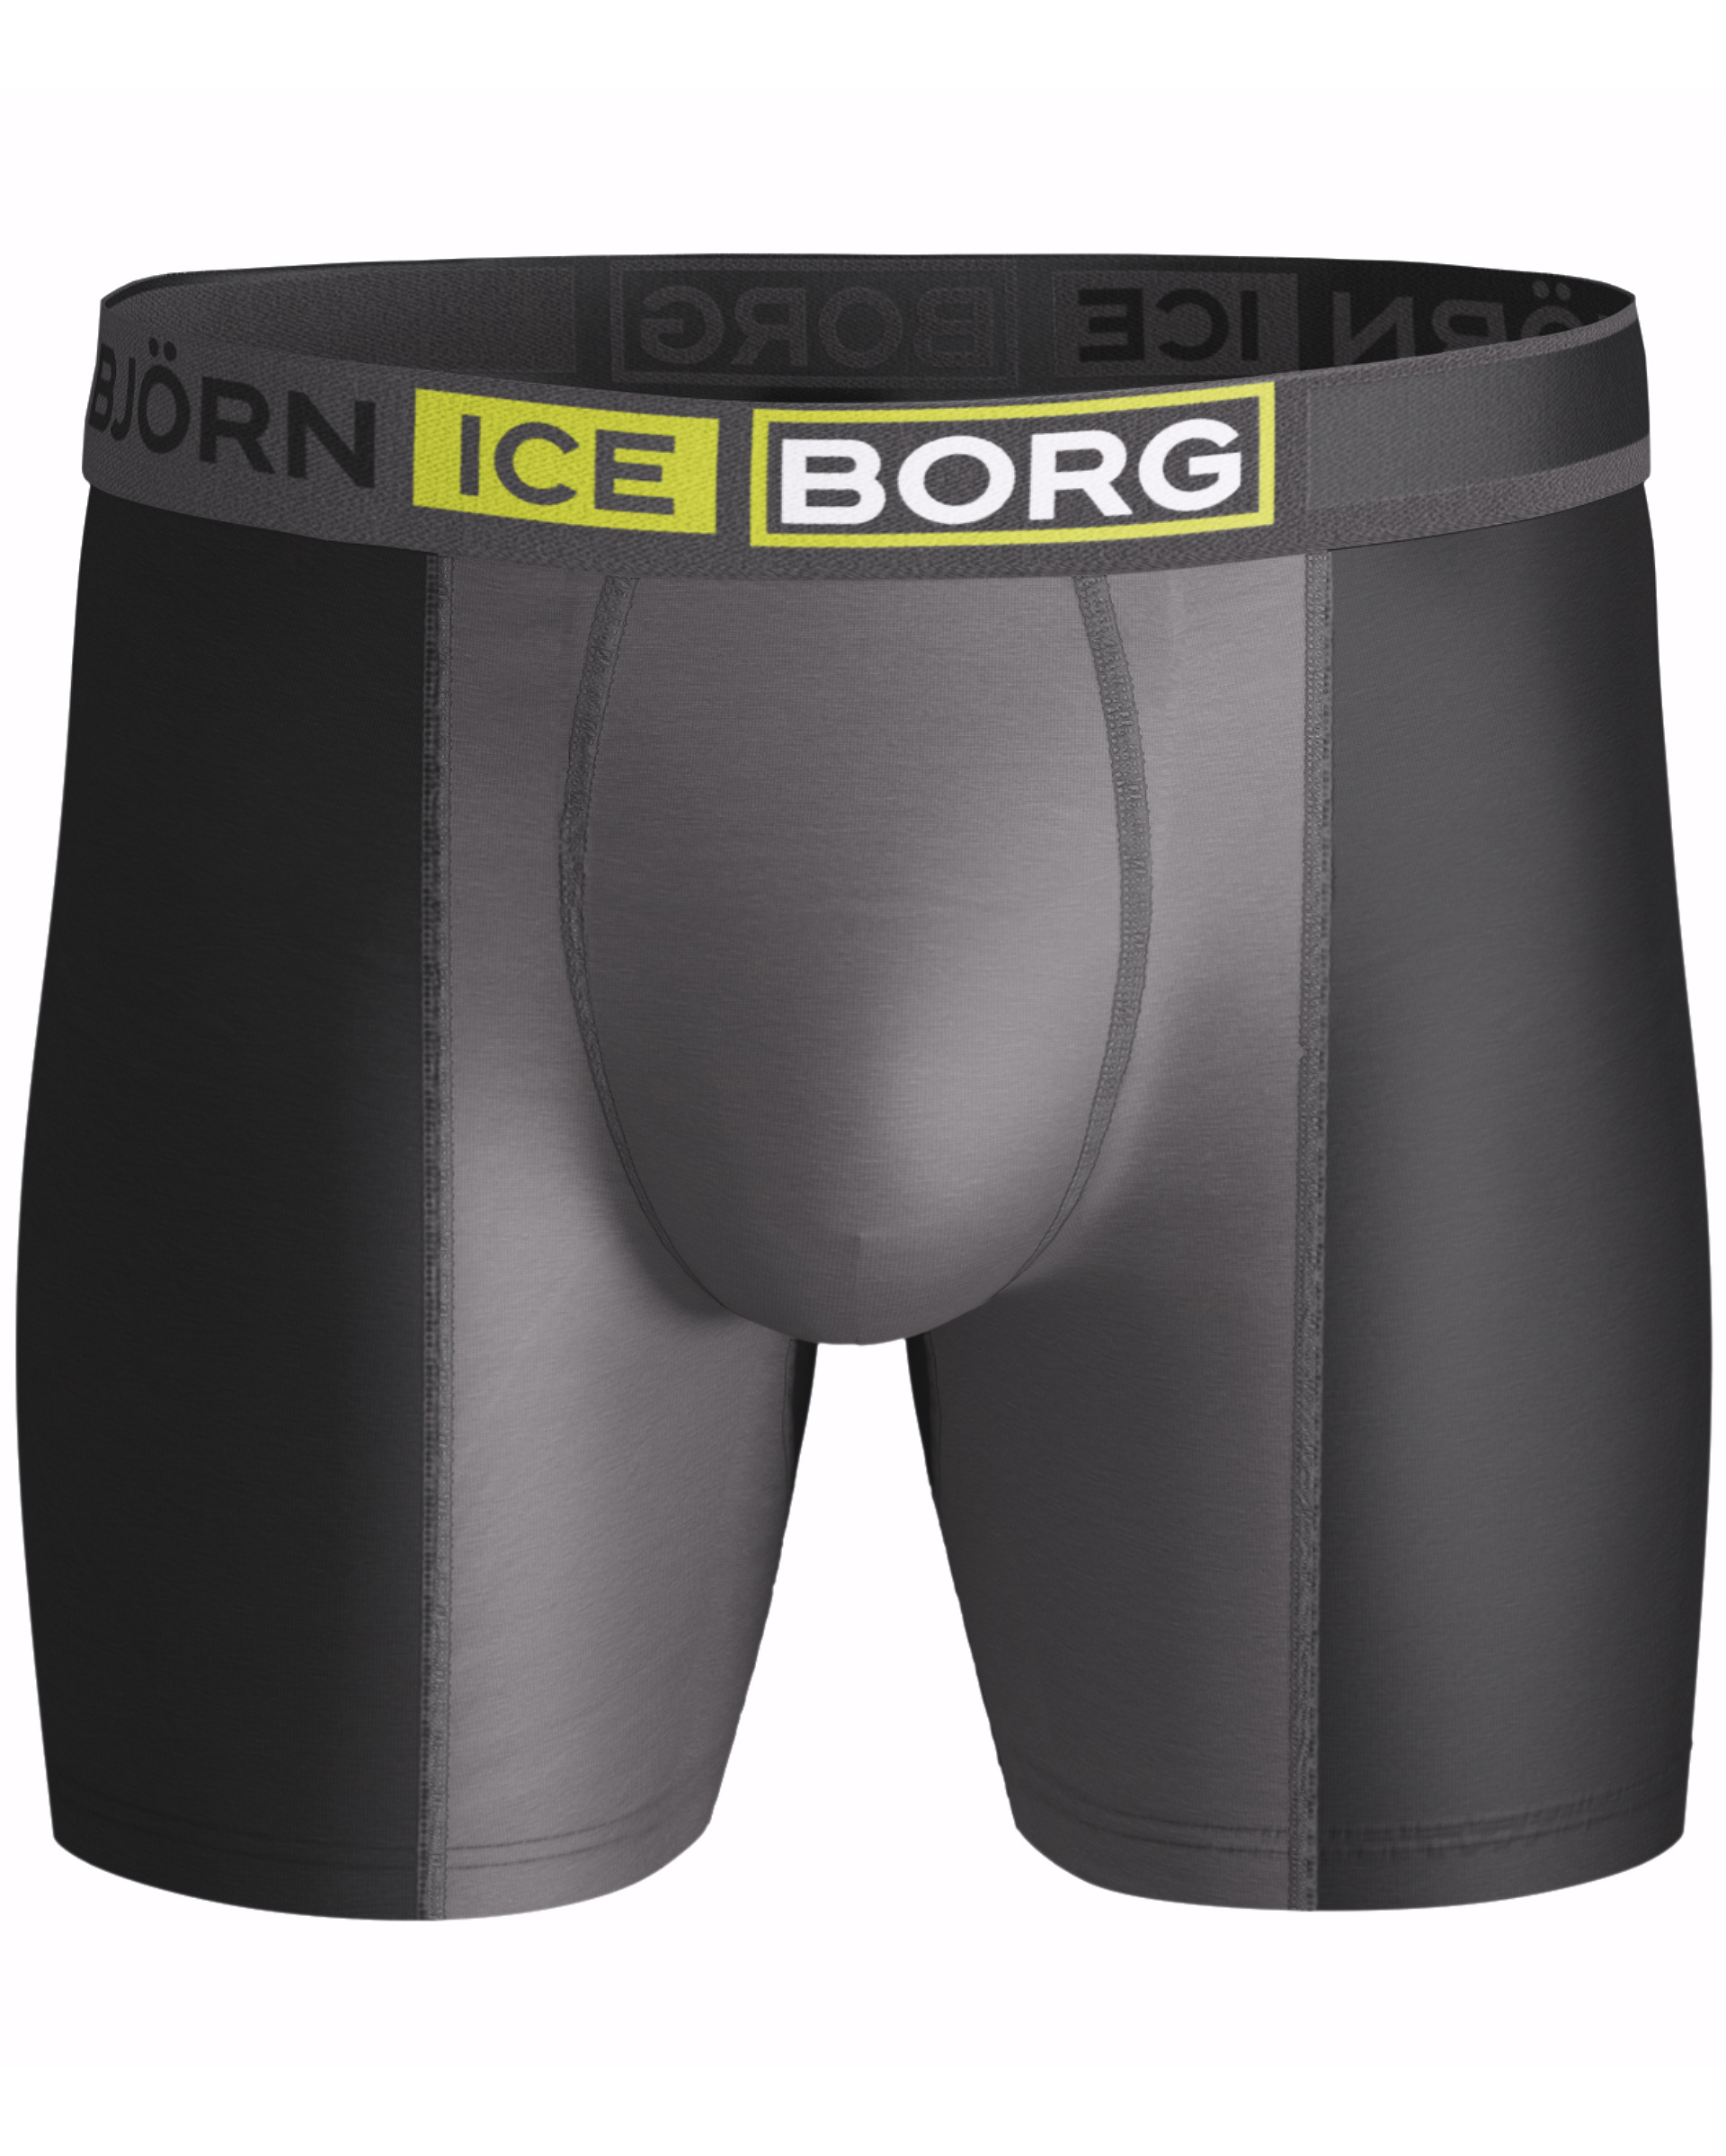 Bjorn Borg Ice Shorts Pierce - Black Beauty